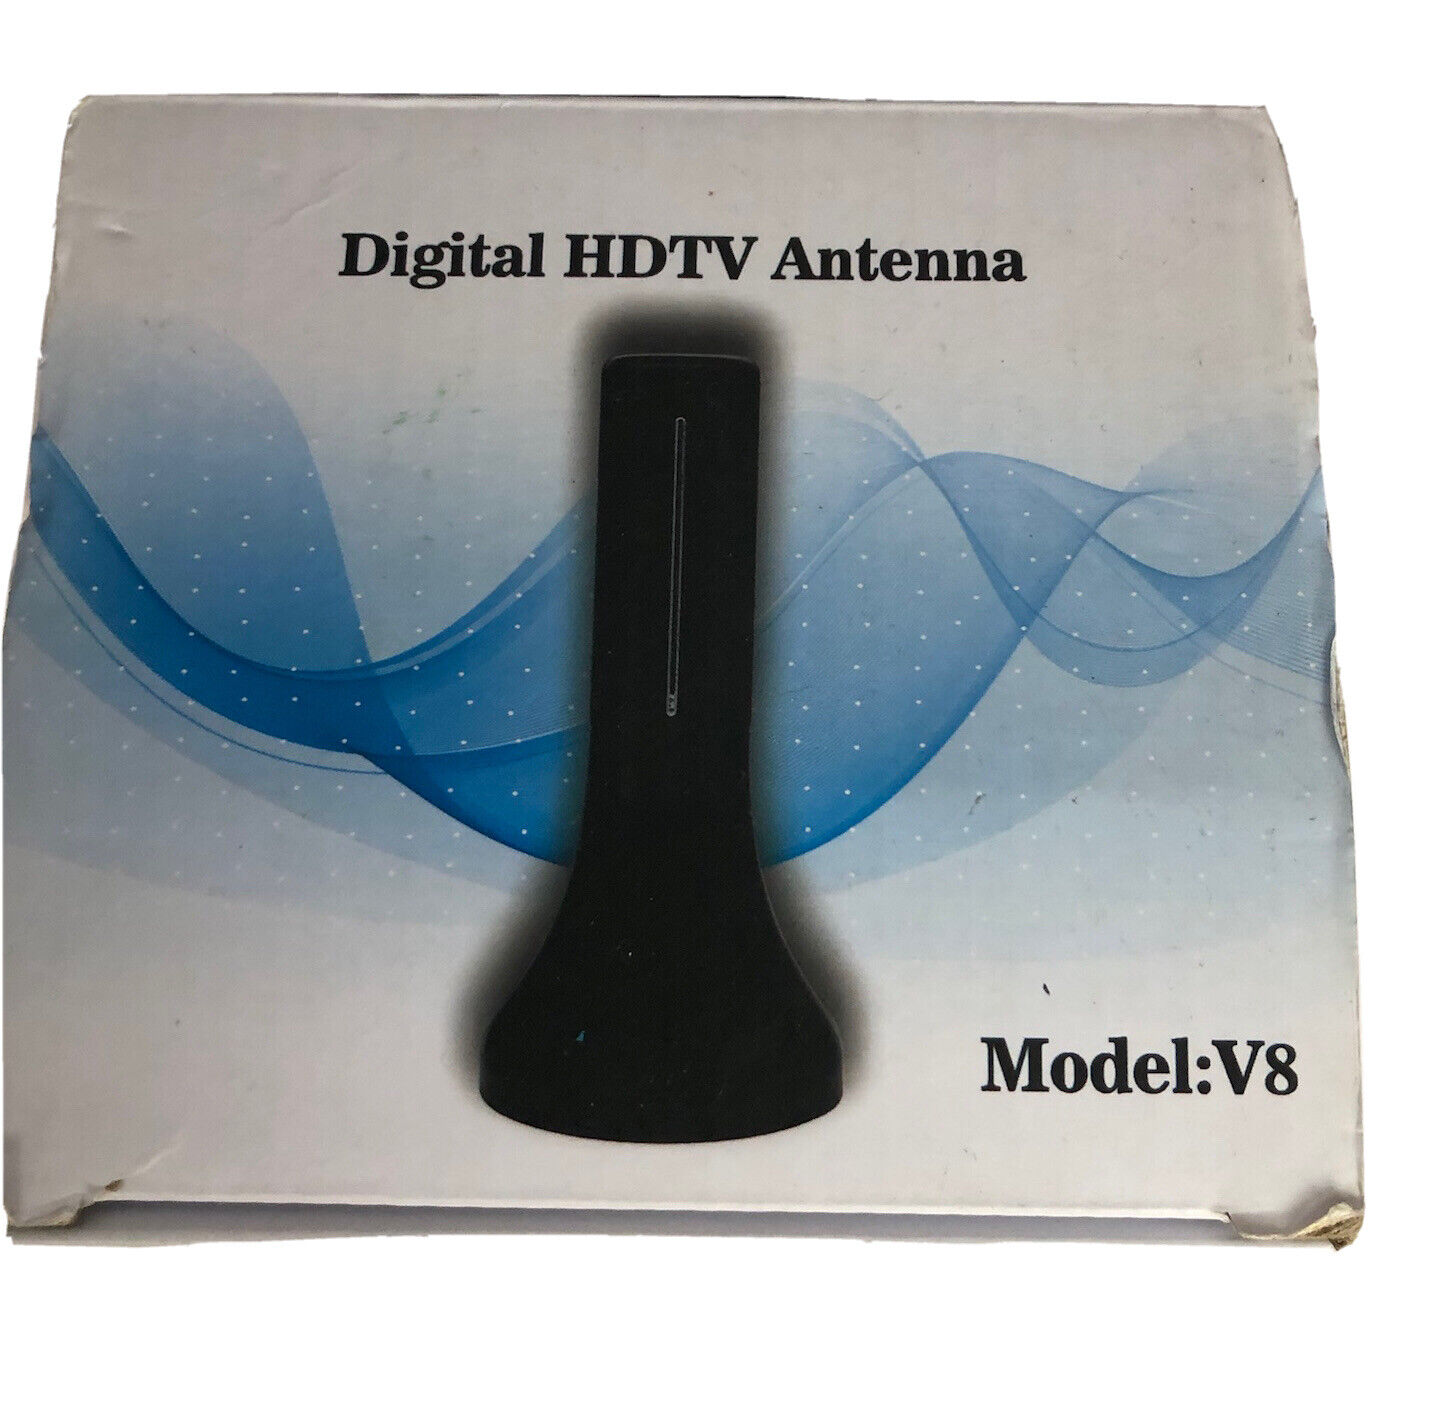 HDTV Antenna - 2019 Updated Version Portable HDTV Digital Antenna, 60-120Mile